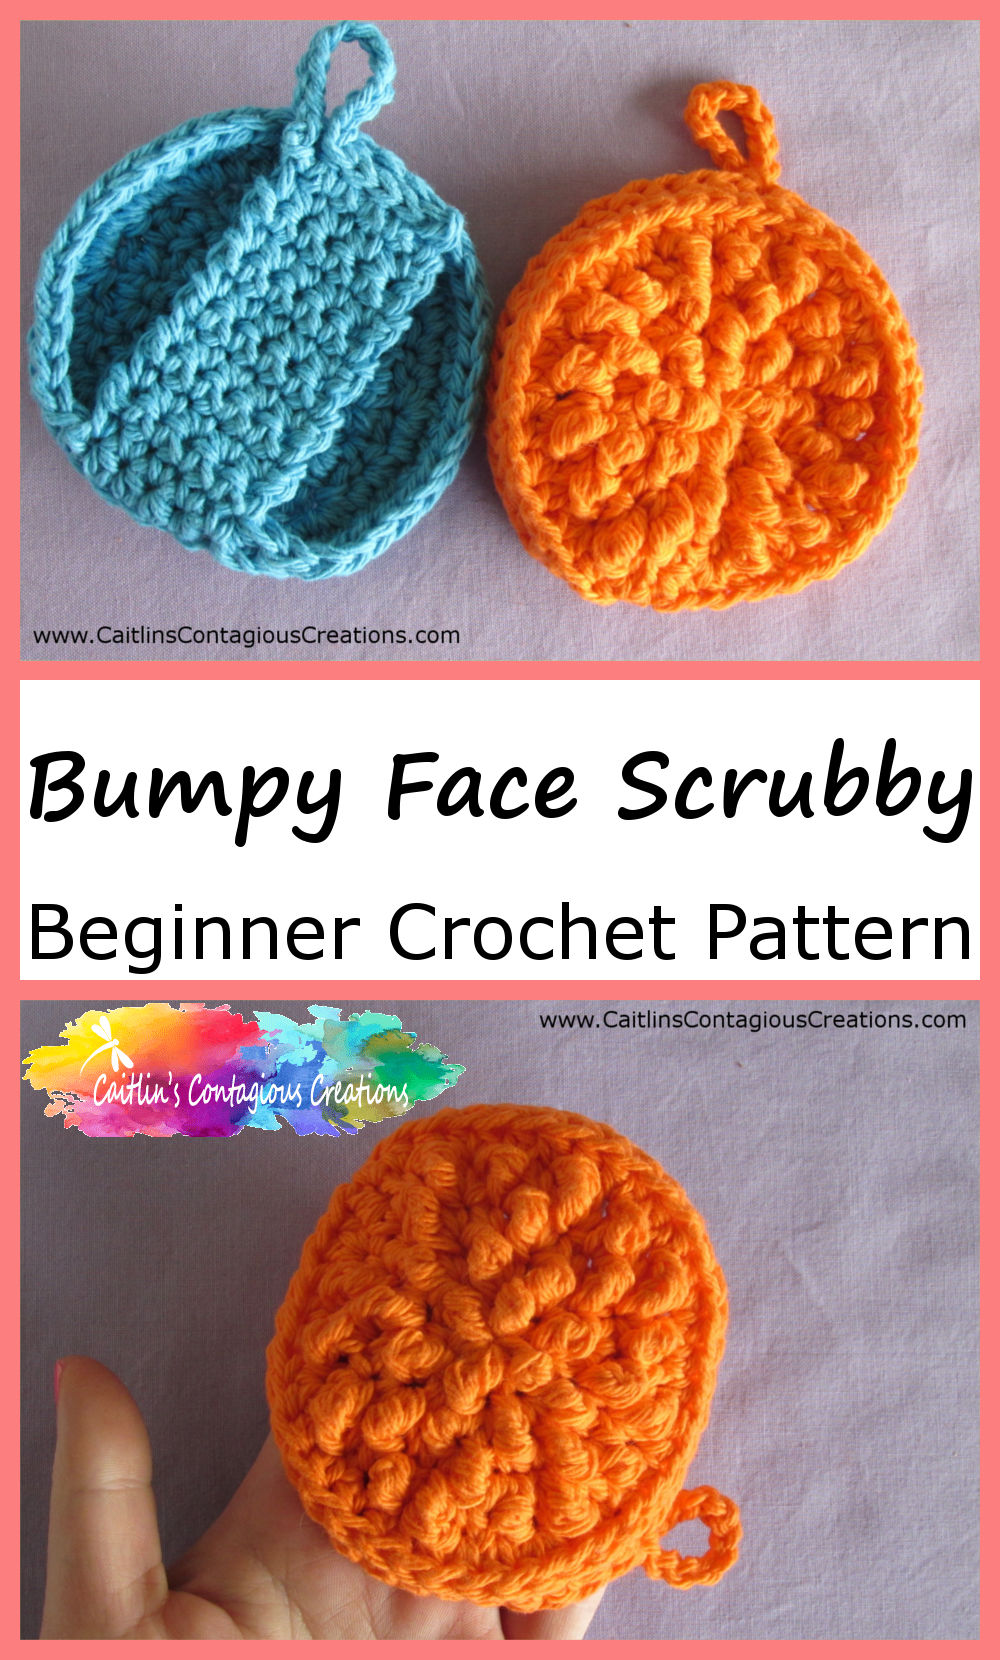 Bumpy Face Scrubby Beginner Crochet Pattern